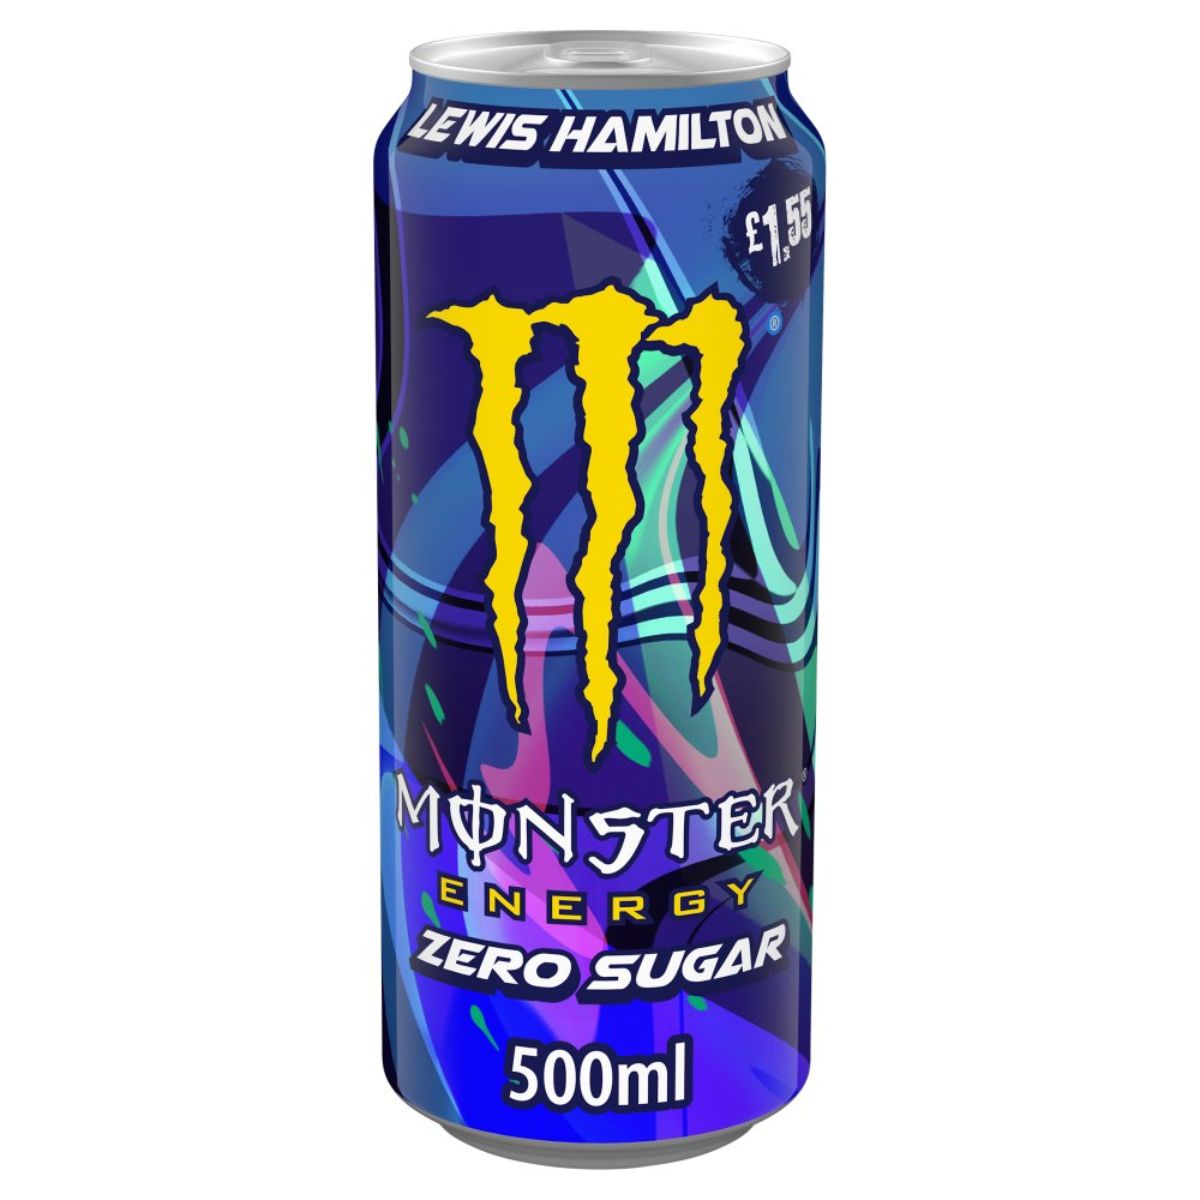 Monster - Lewis Hamilton Zero Sugar - 500ml.